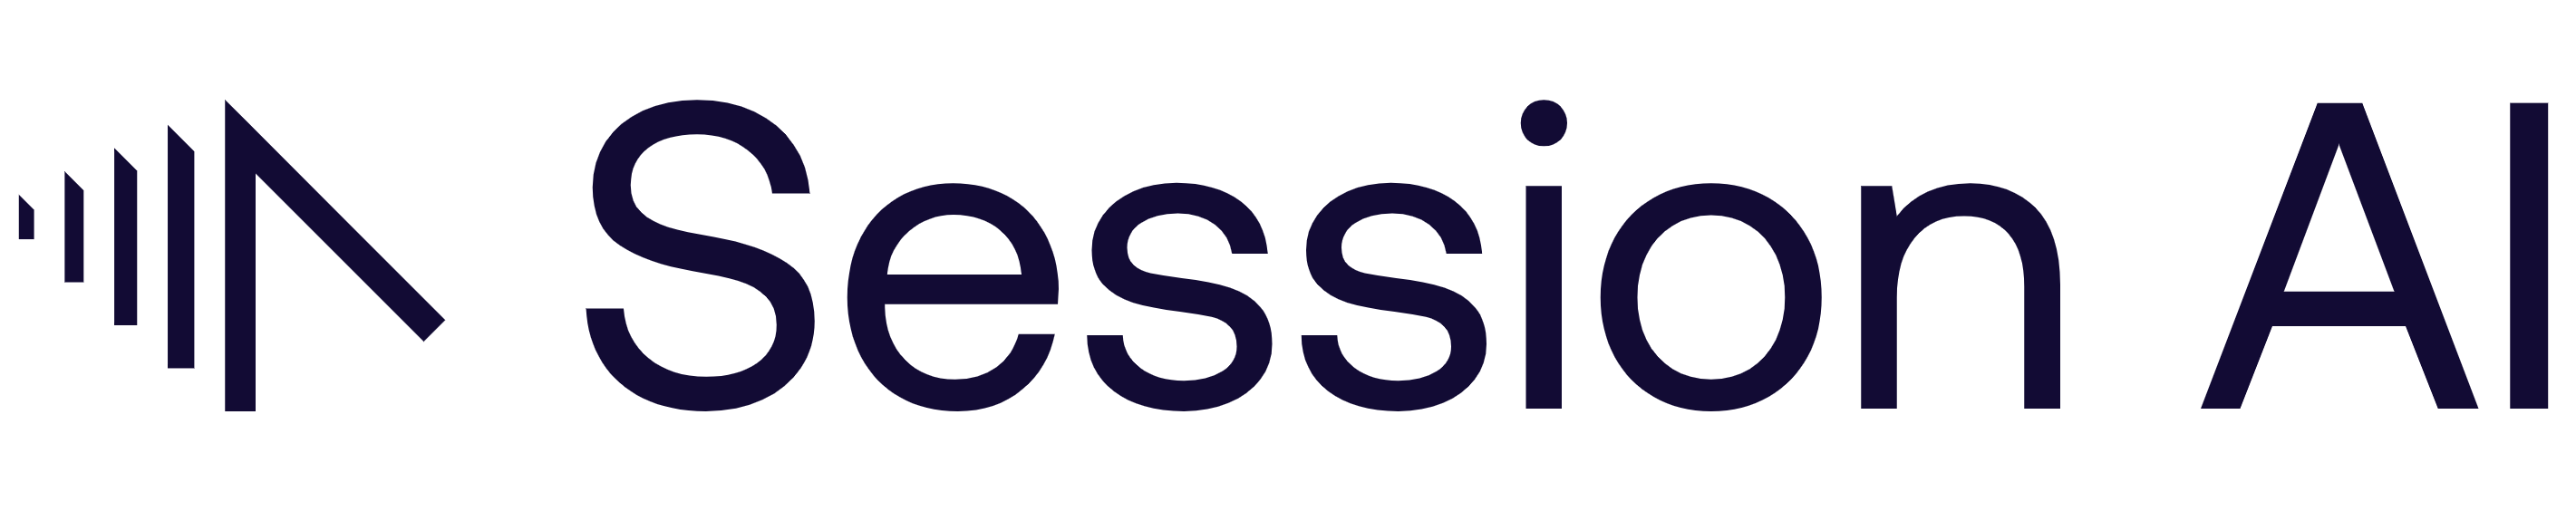 SessionAI logo